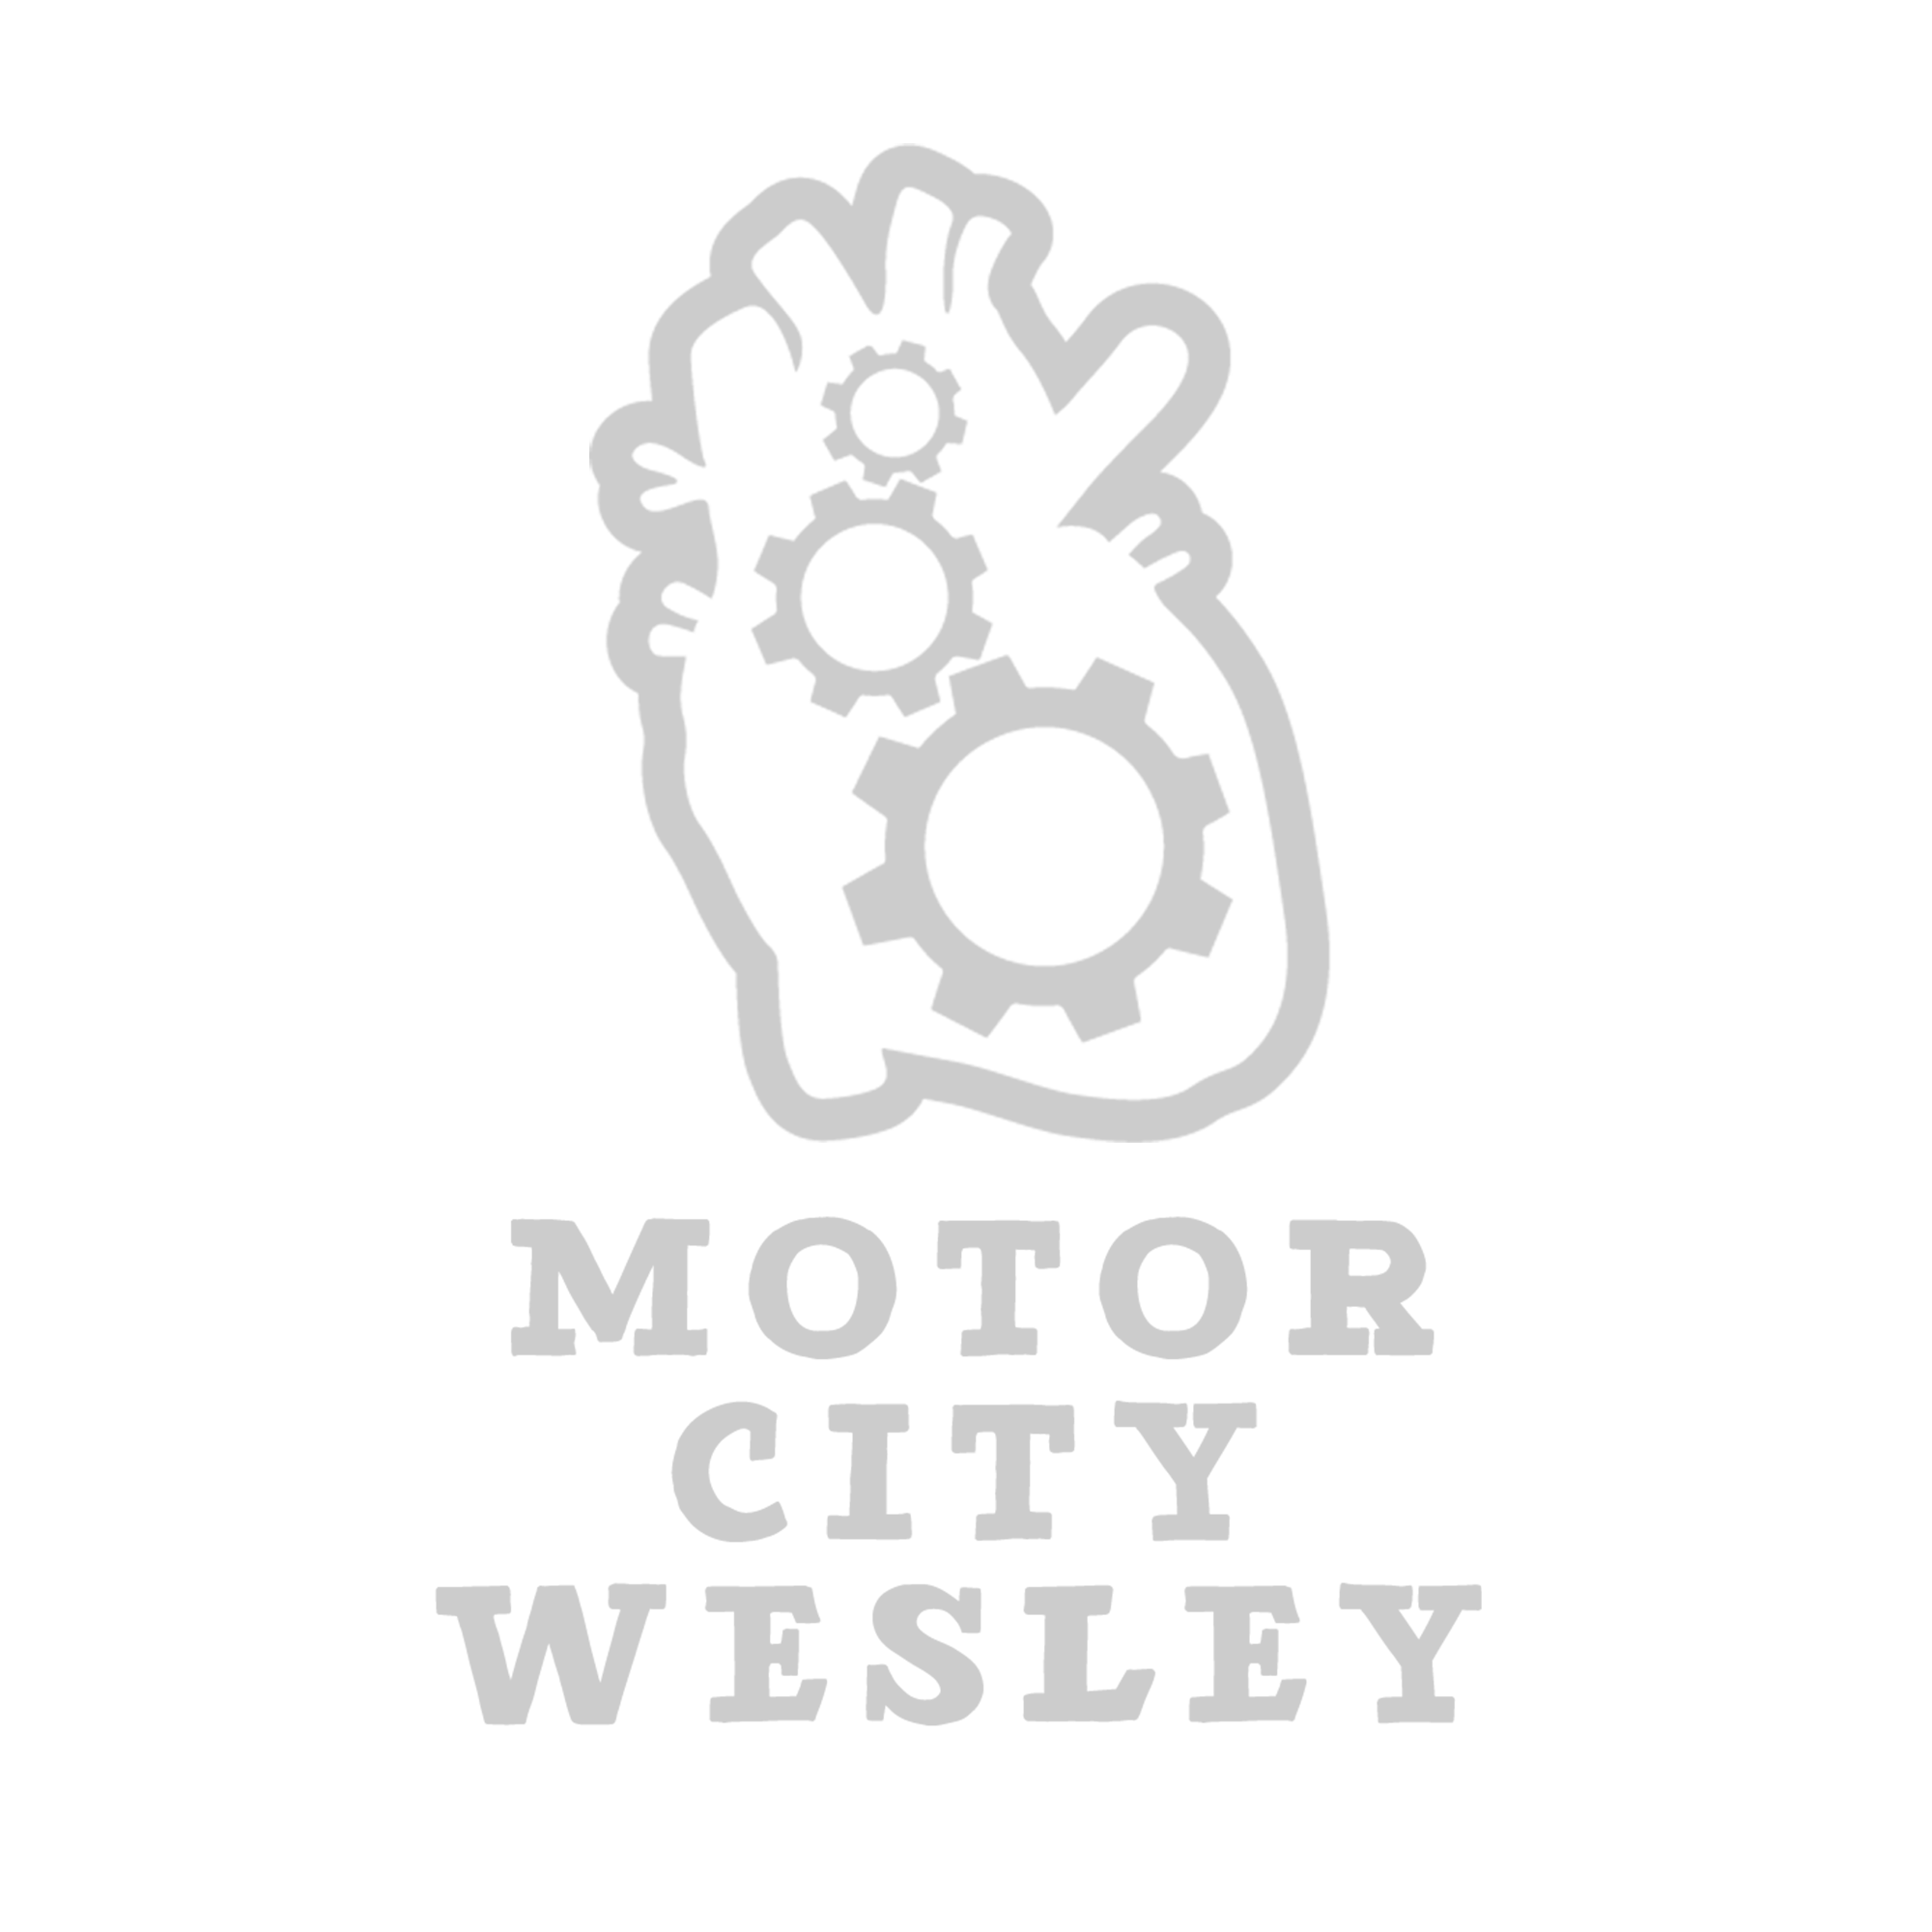 Motor City Wesley